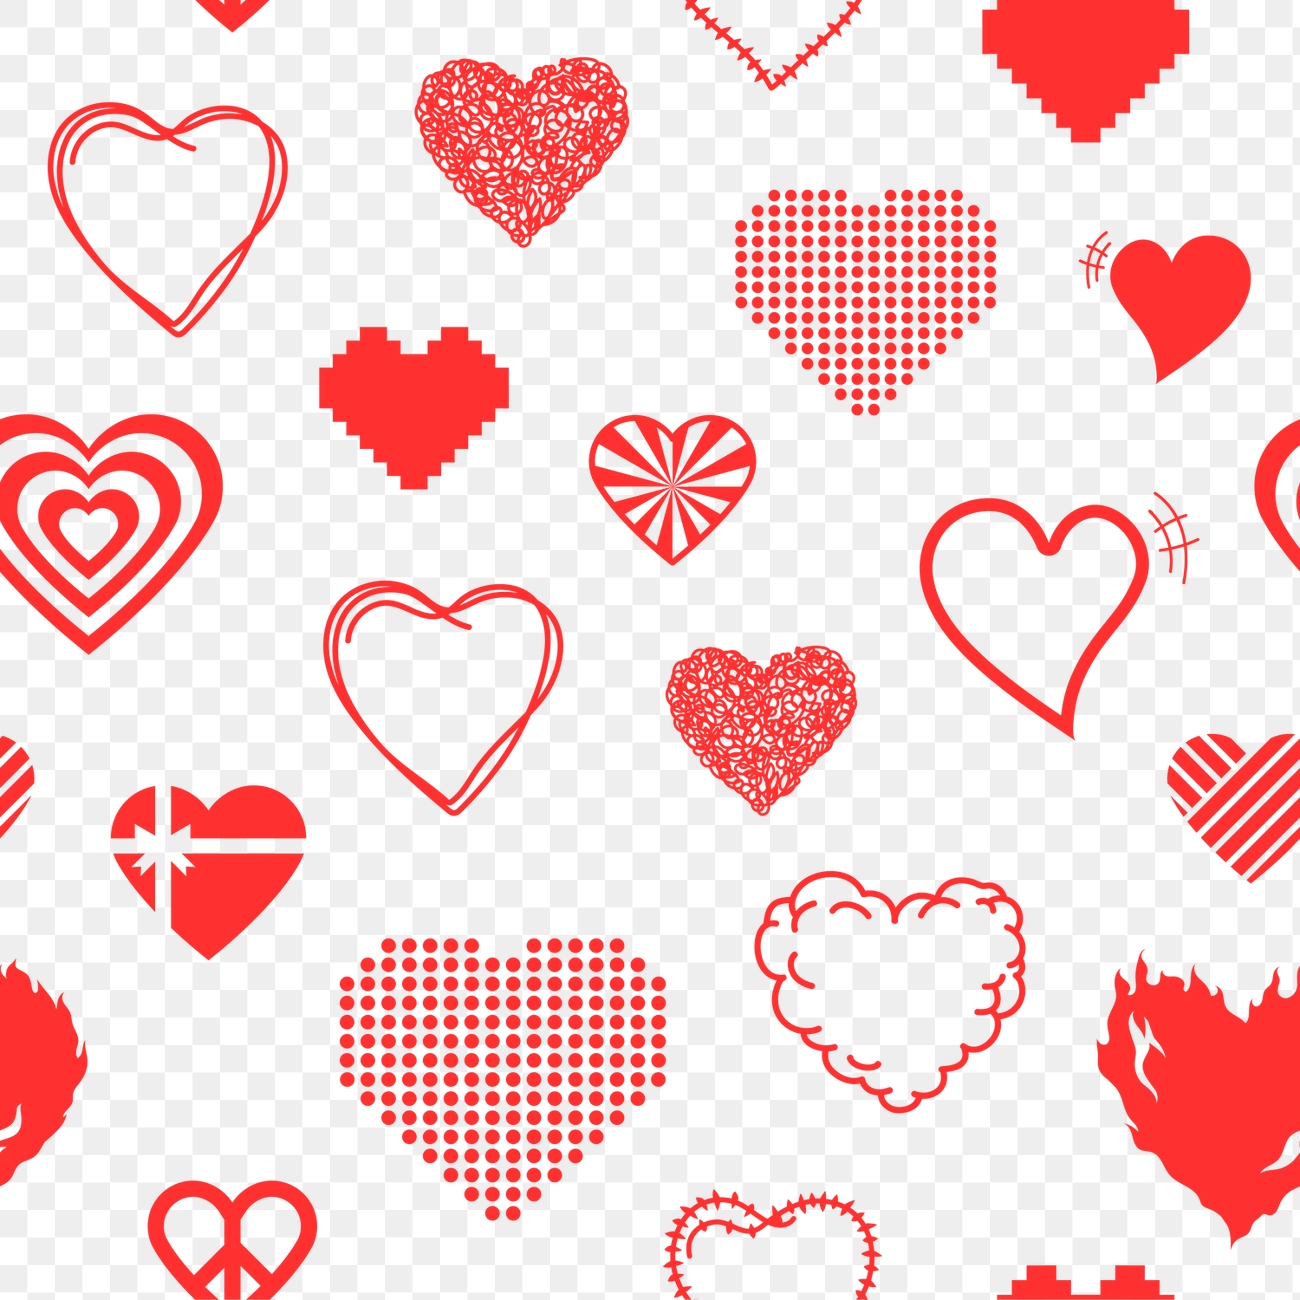 Heart pattern PNG transparent background, | Premium PNG - rawpixel